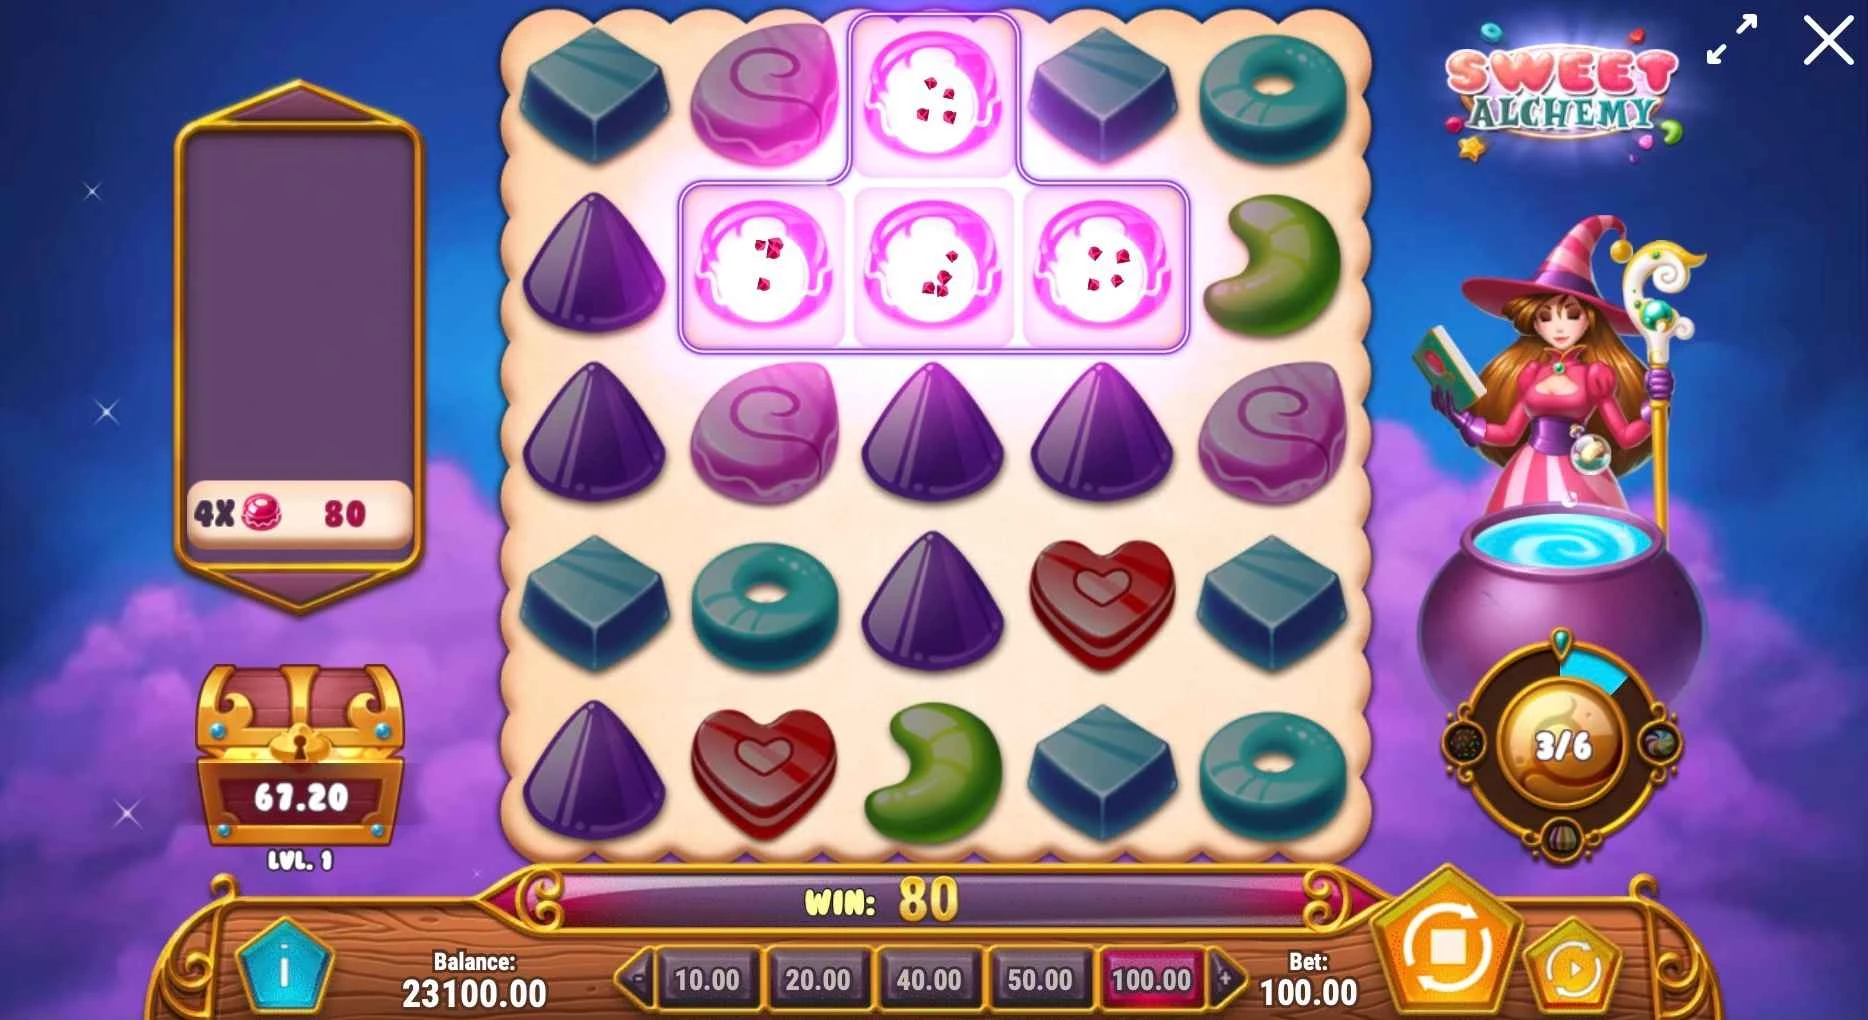 Sweet Alchemy Slot by Play'n Go - Demo